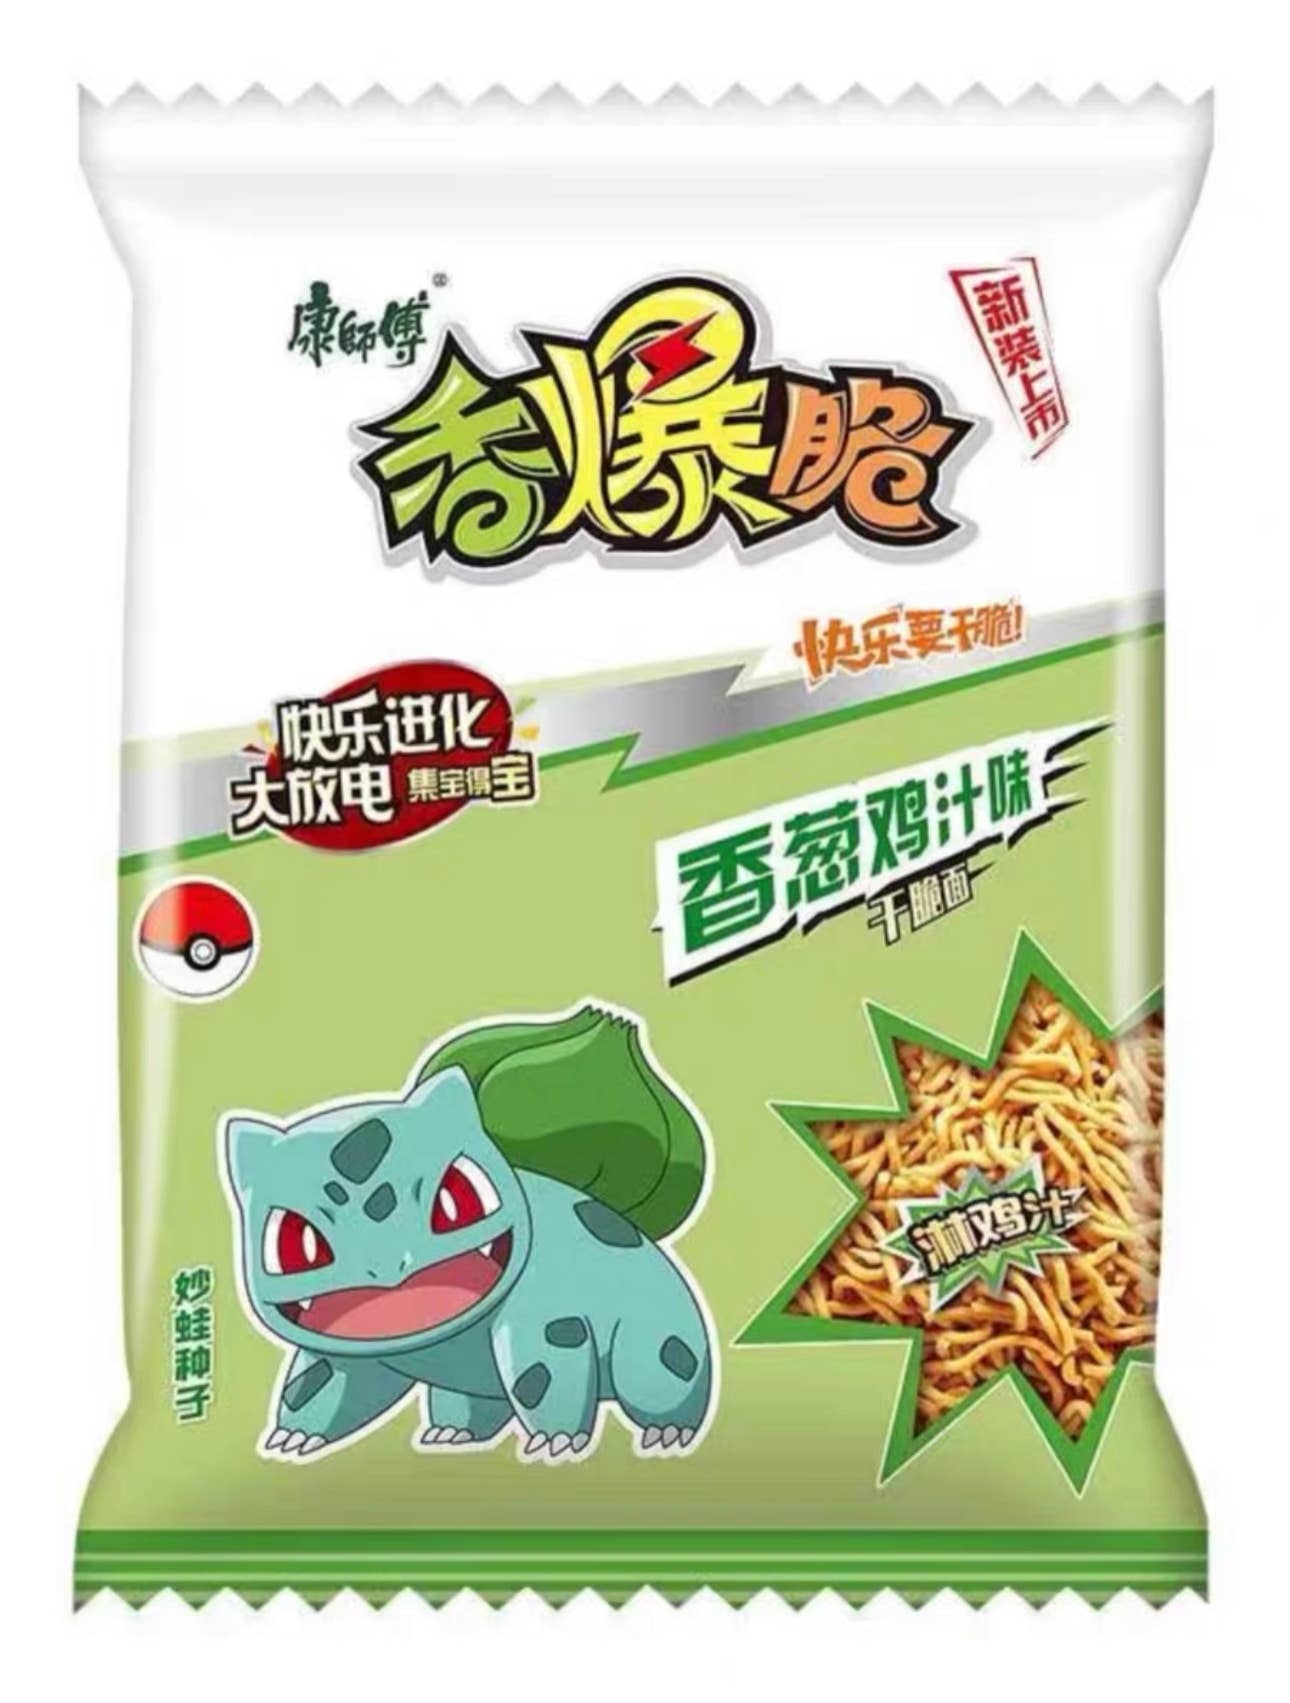 Pokémon Crispy Dry Instant Noodle Chive Chicken Flavor (33g) 4-Pack